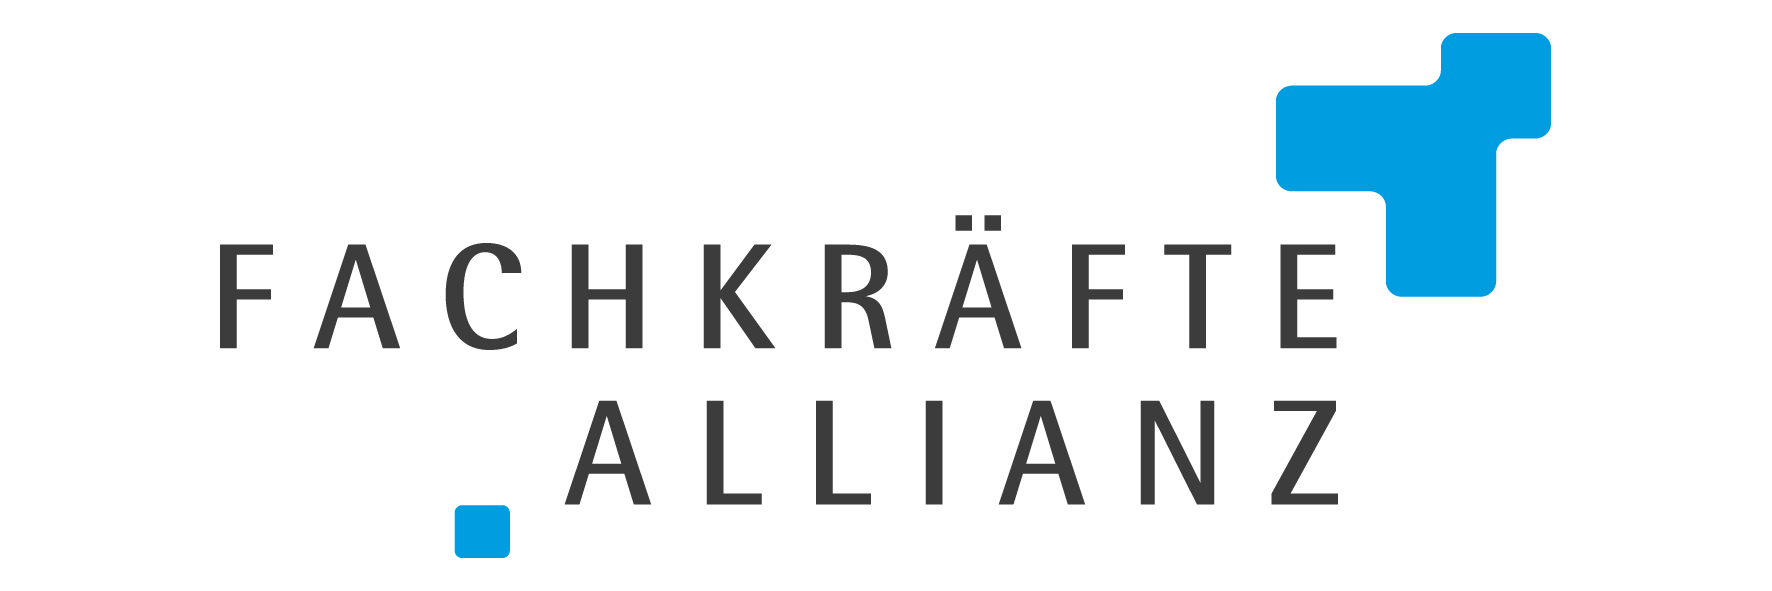 Fachkrfteallianz Logo